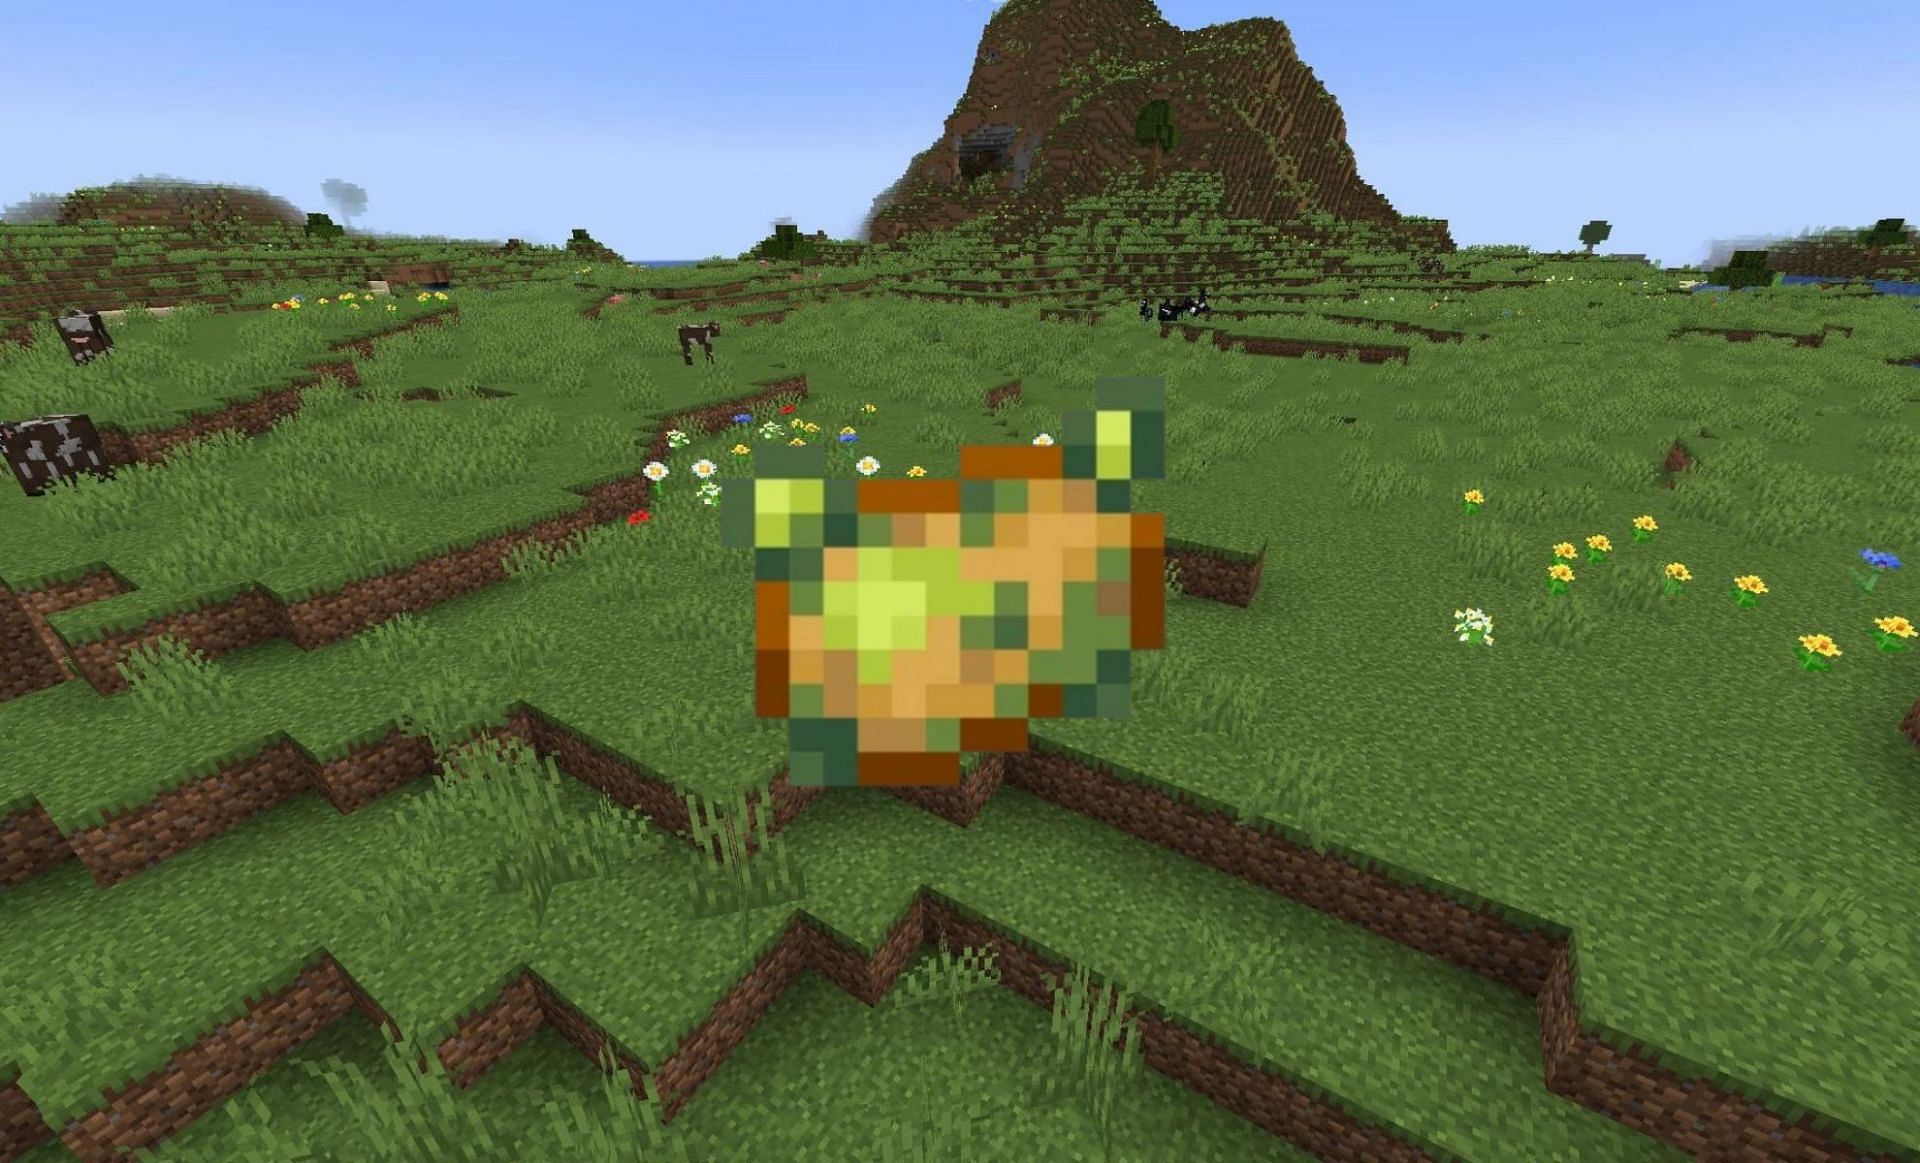 Poisonous potato in Minecraft (Images via Minecraft Wiki)